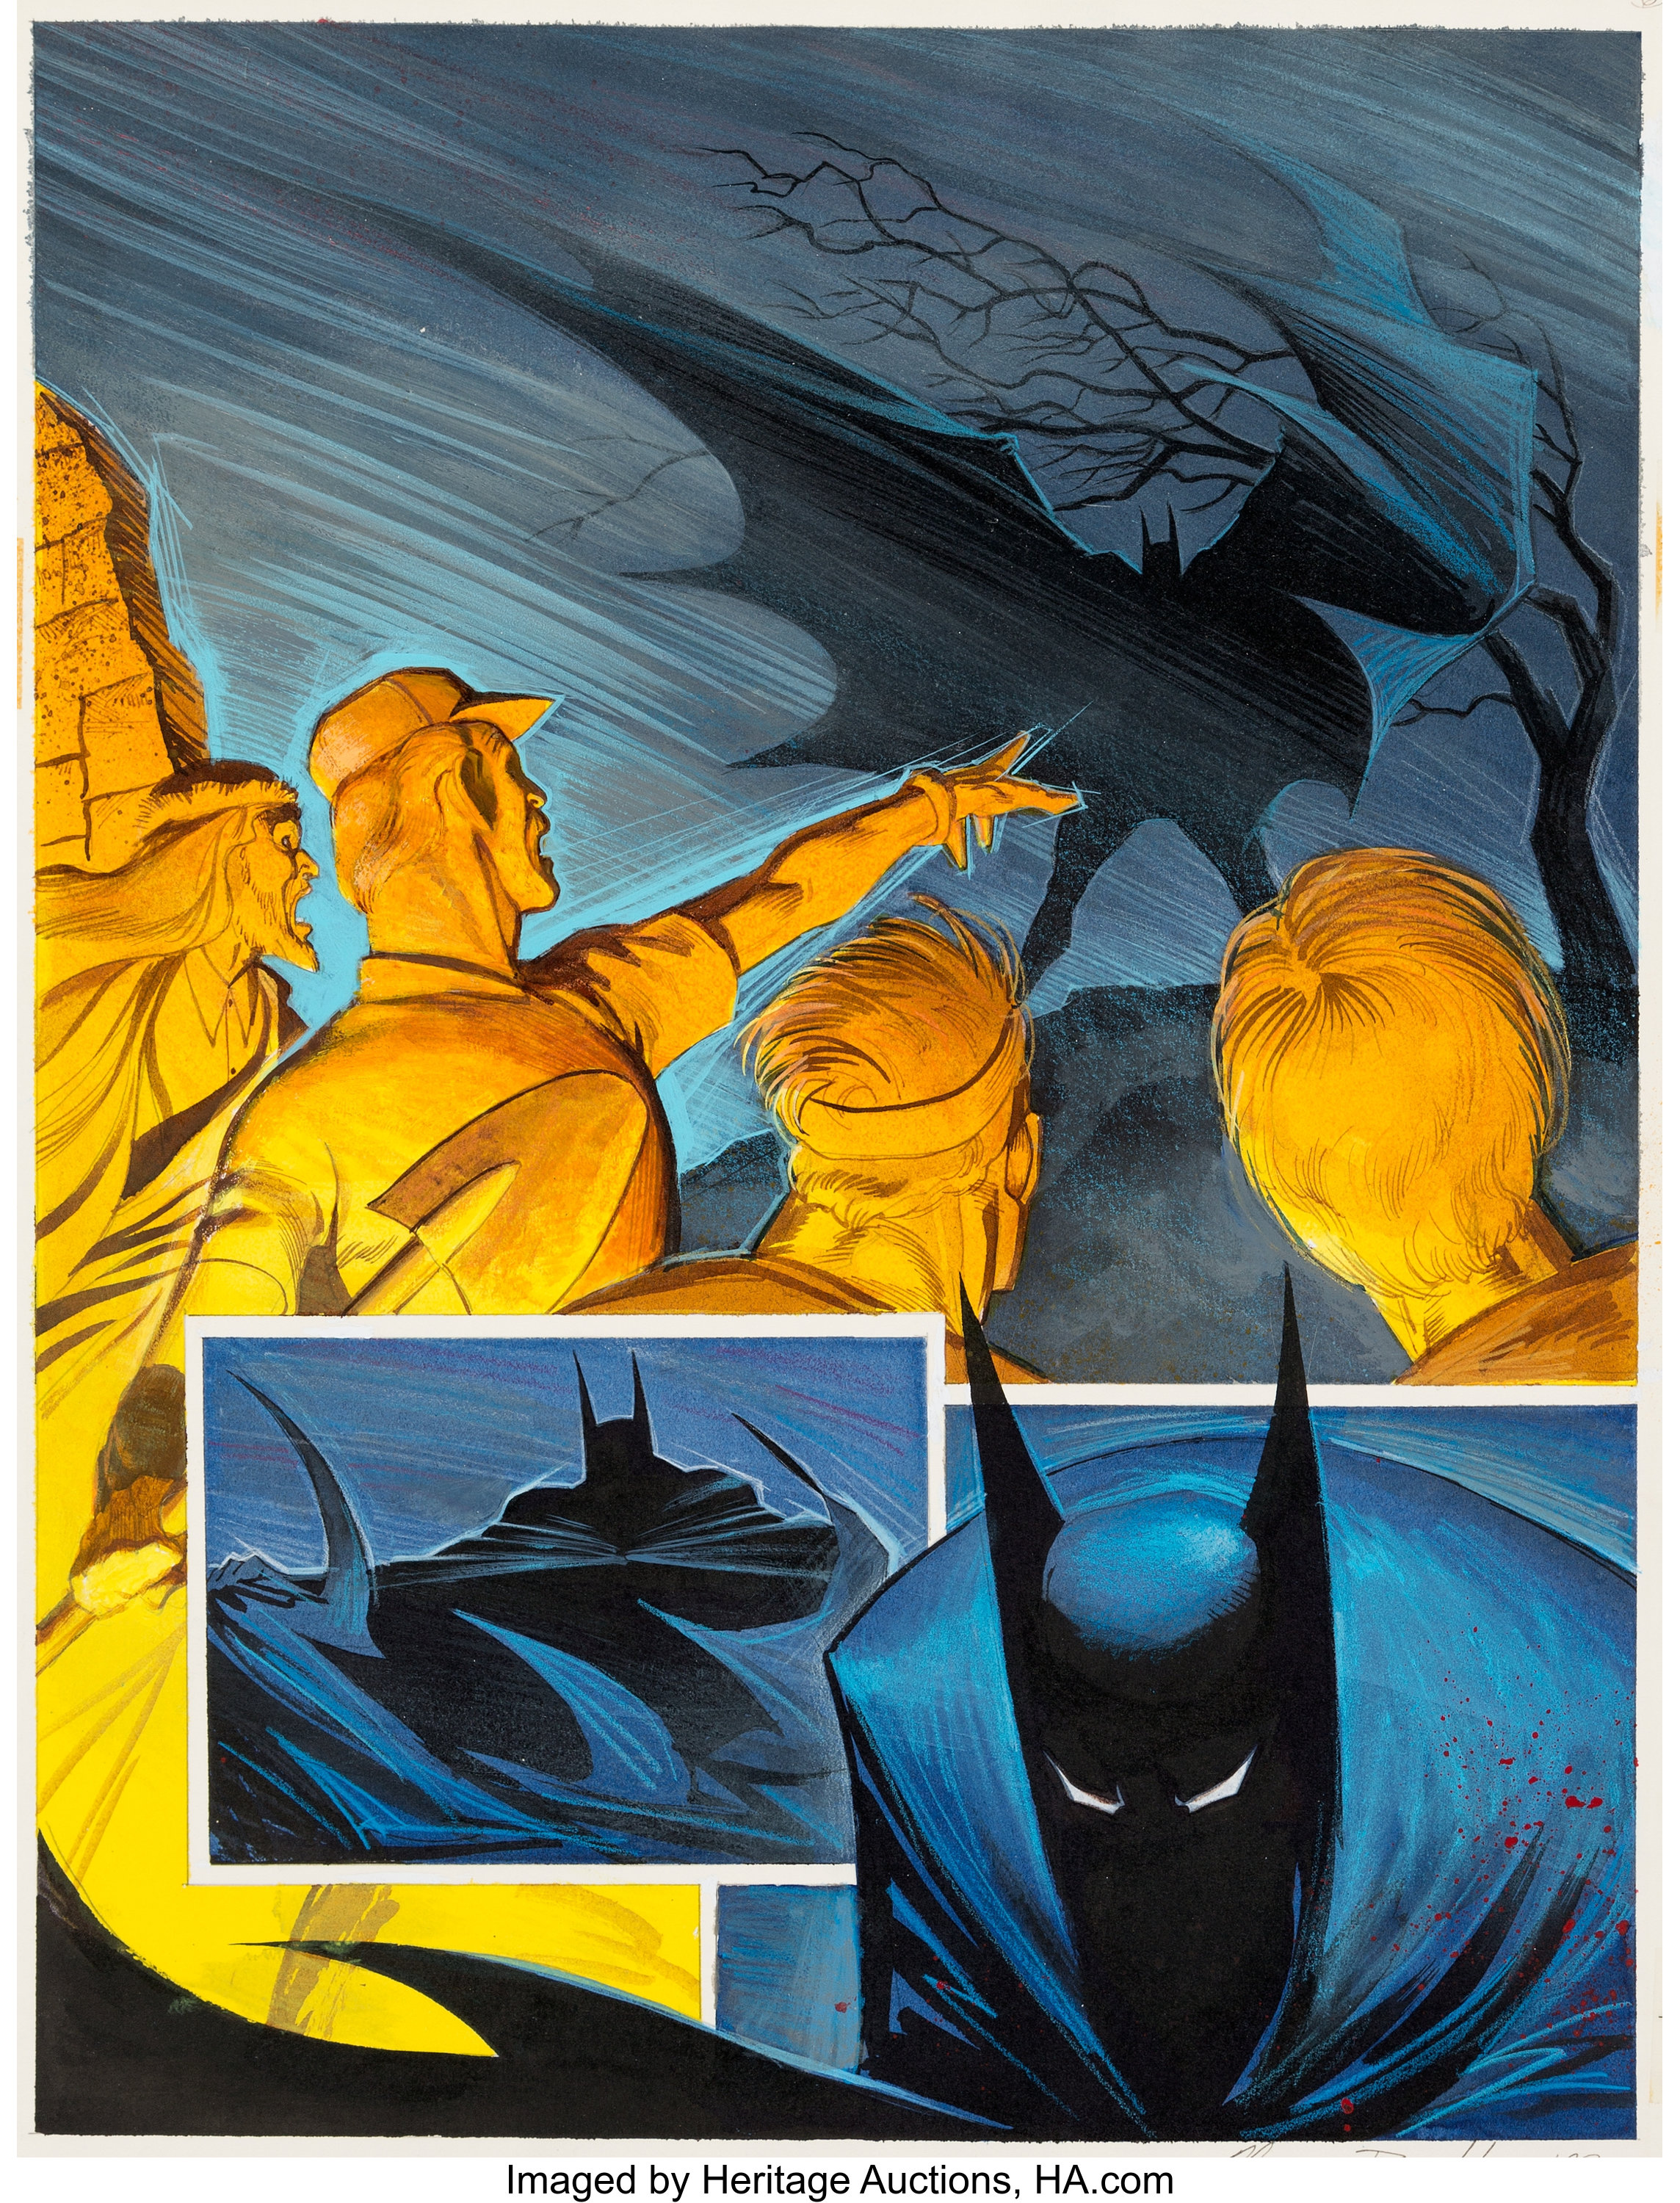 Norm Breyfogle Batman: Birth of the Demon Story Page 2 Original Art | Lot  #95028 | Heritage Auctions